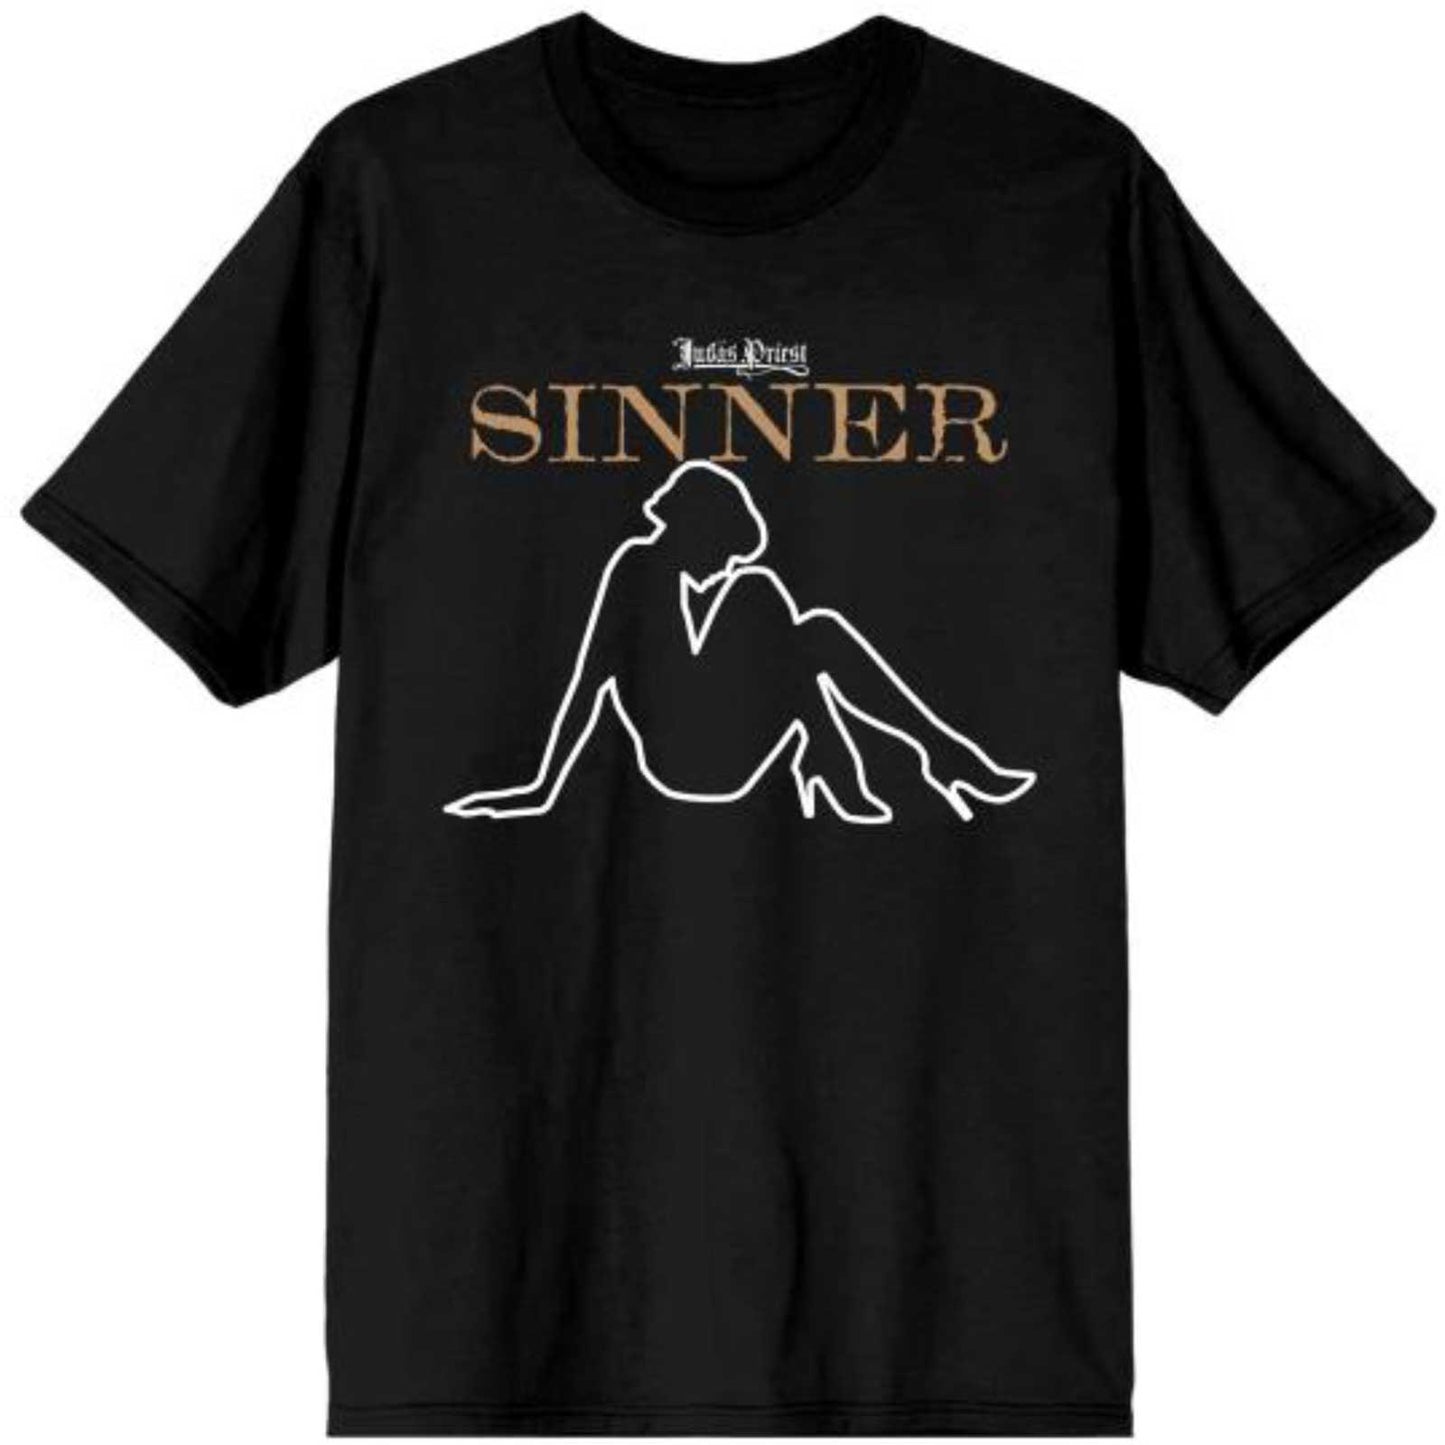 Judas Priest T-Shirt: Sin After Sin Sinner Slogan Lady